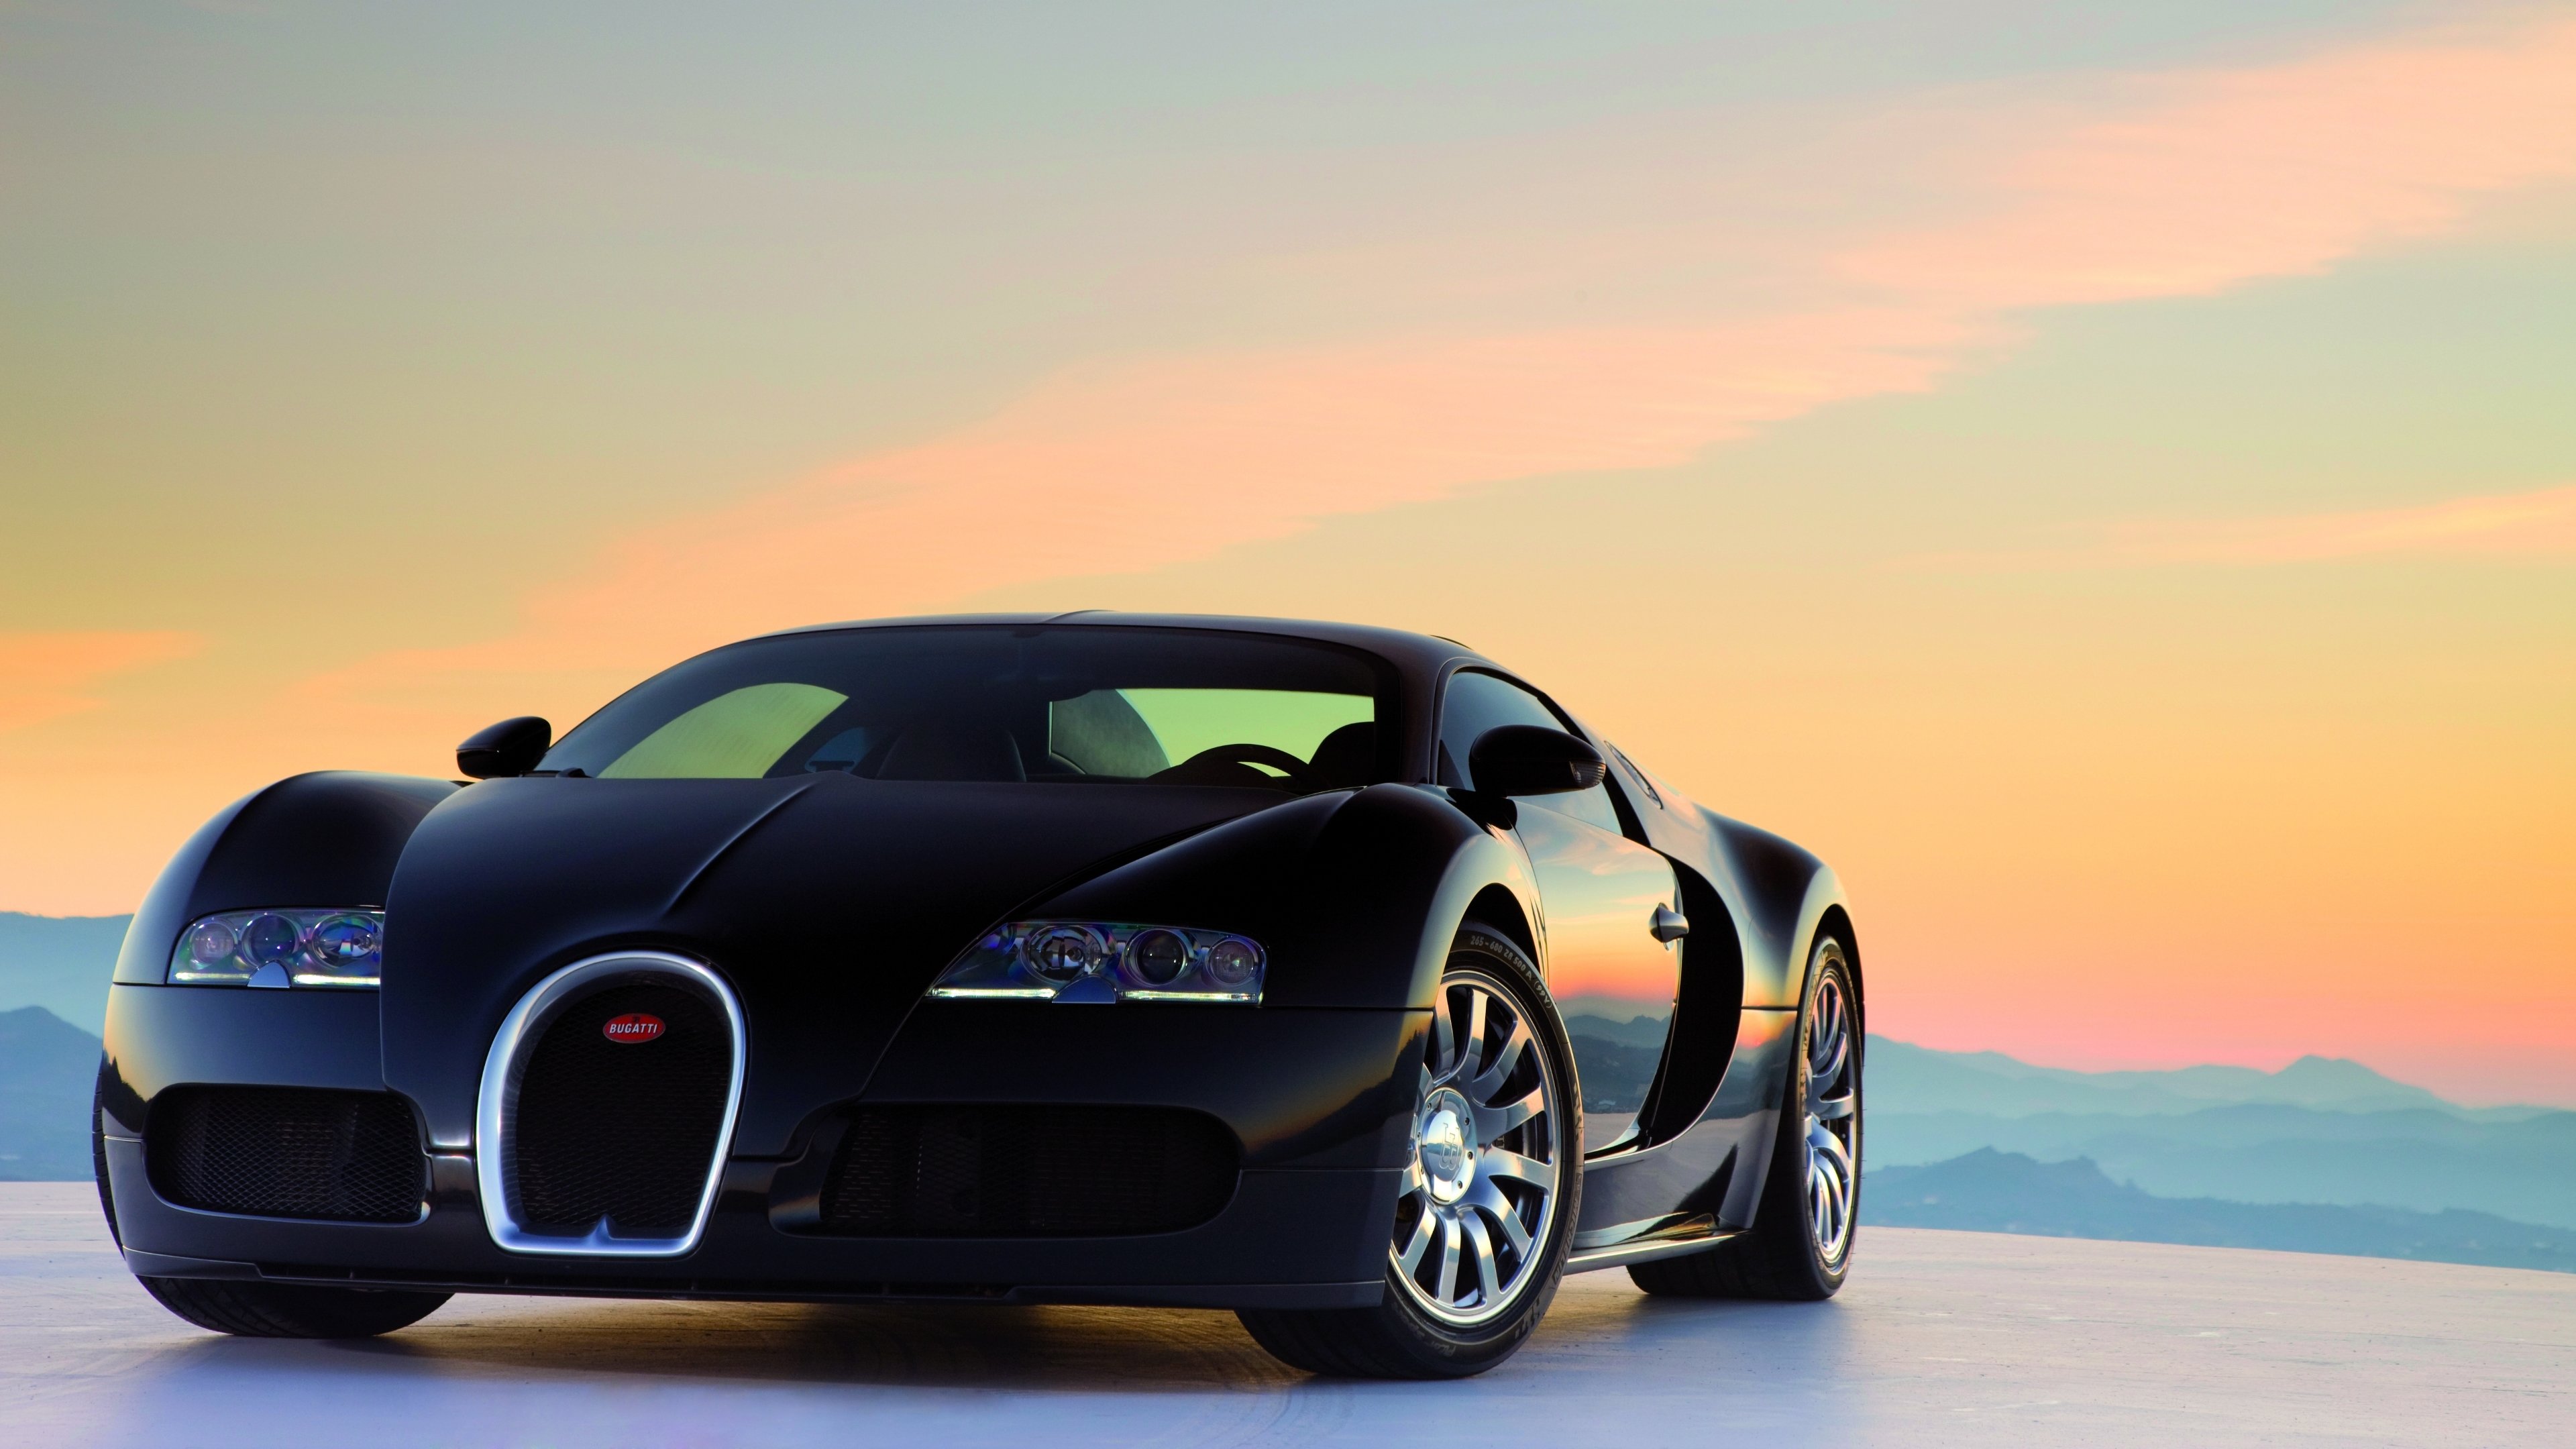 Download hd 4k Bugatti Veyron desktop background ID:297861 for free